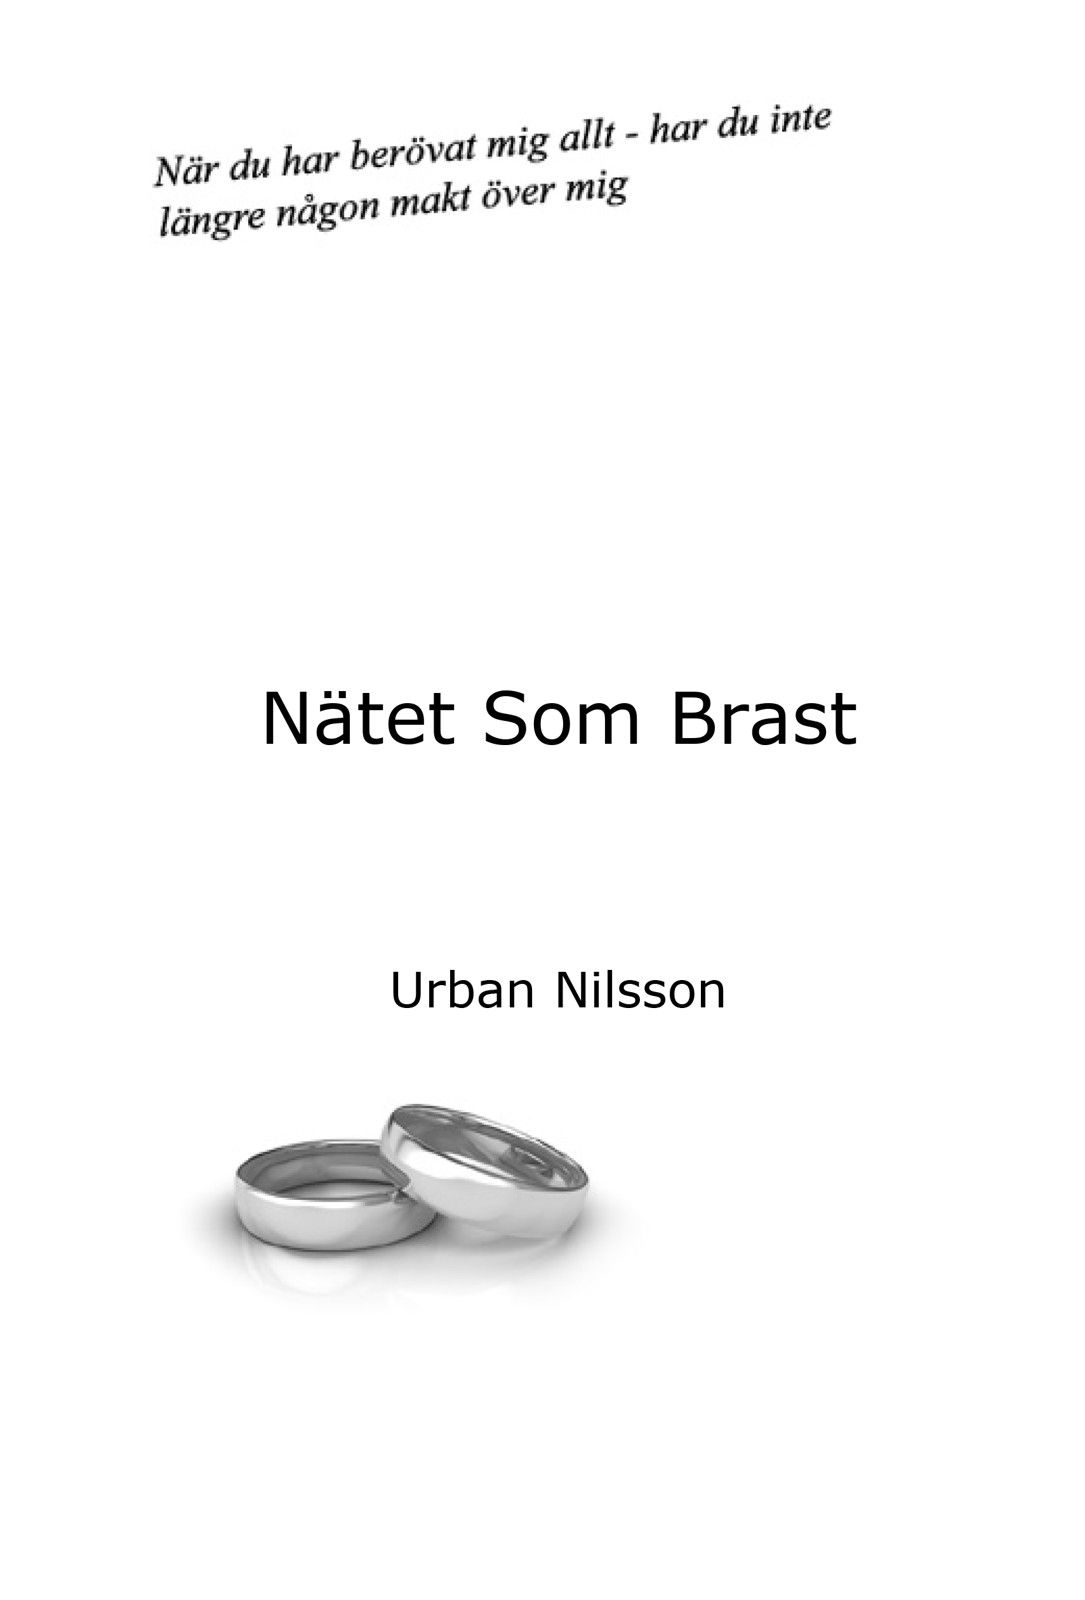 Nätet som Brast, e-bok av Urban Nilsson